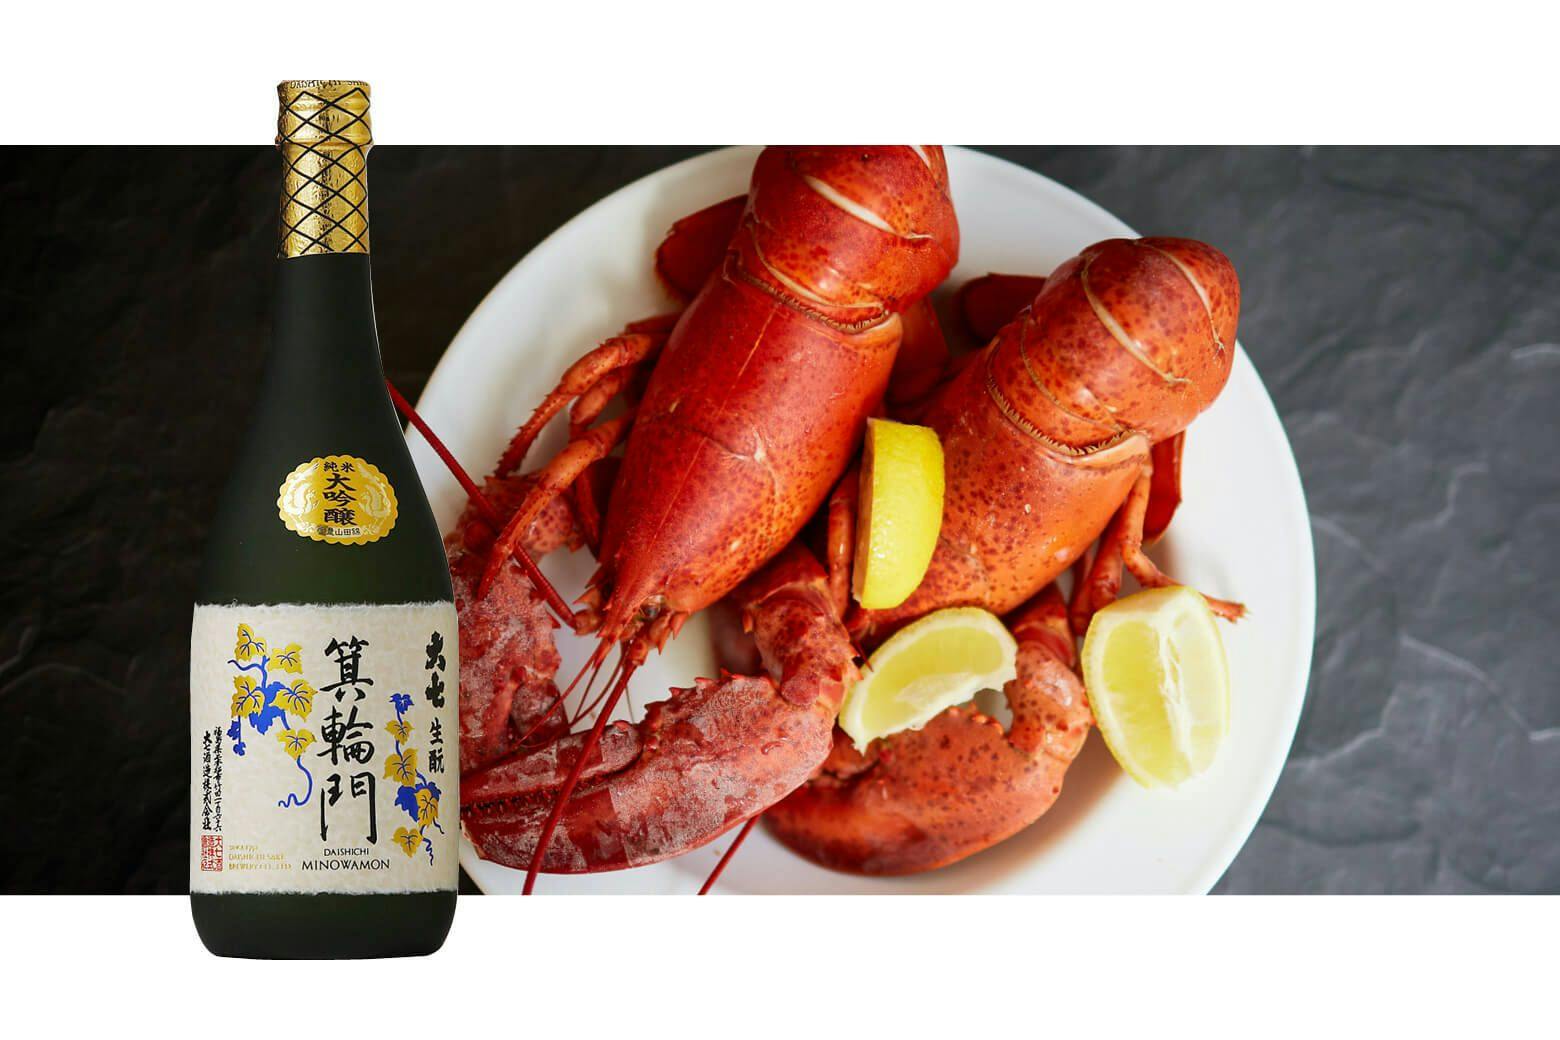 Daishichi Minowamon with lobsters